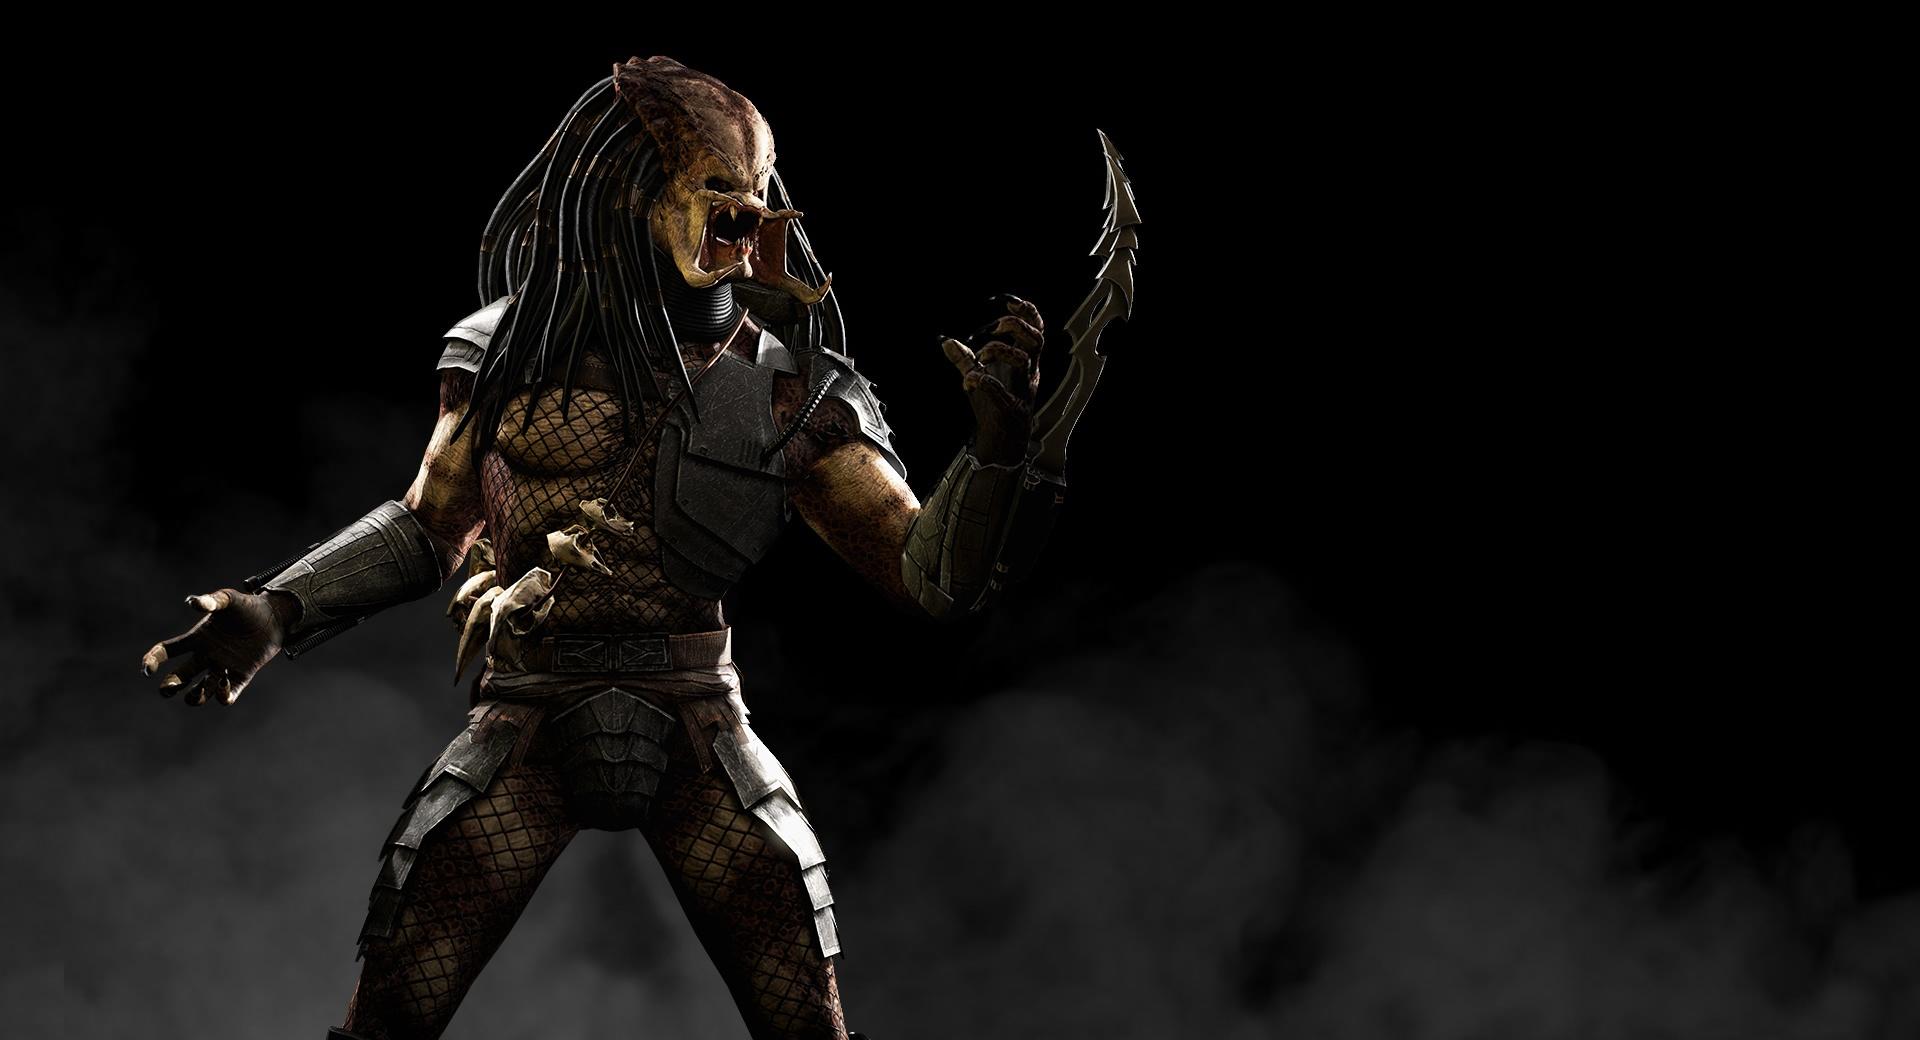 Mortal Kombat X Predator at 1280 x 960 size wallpapers HD quality